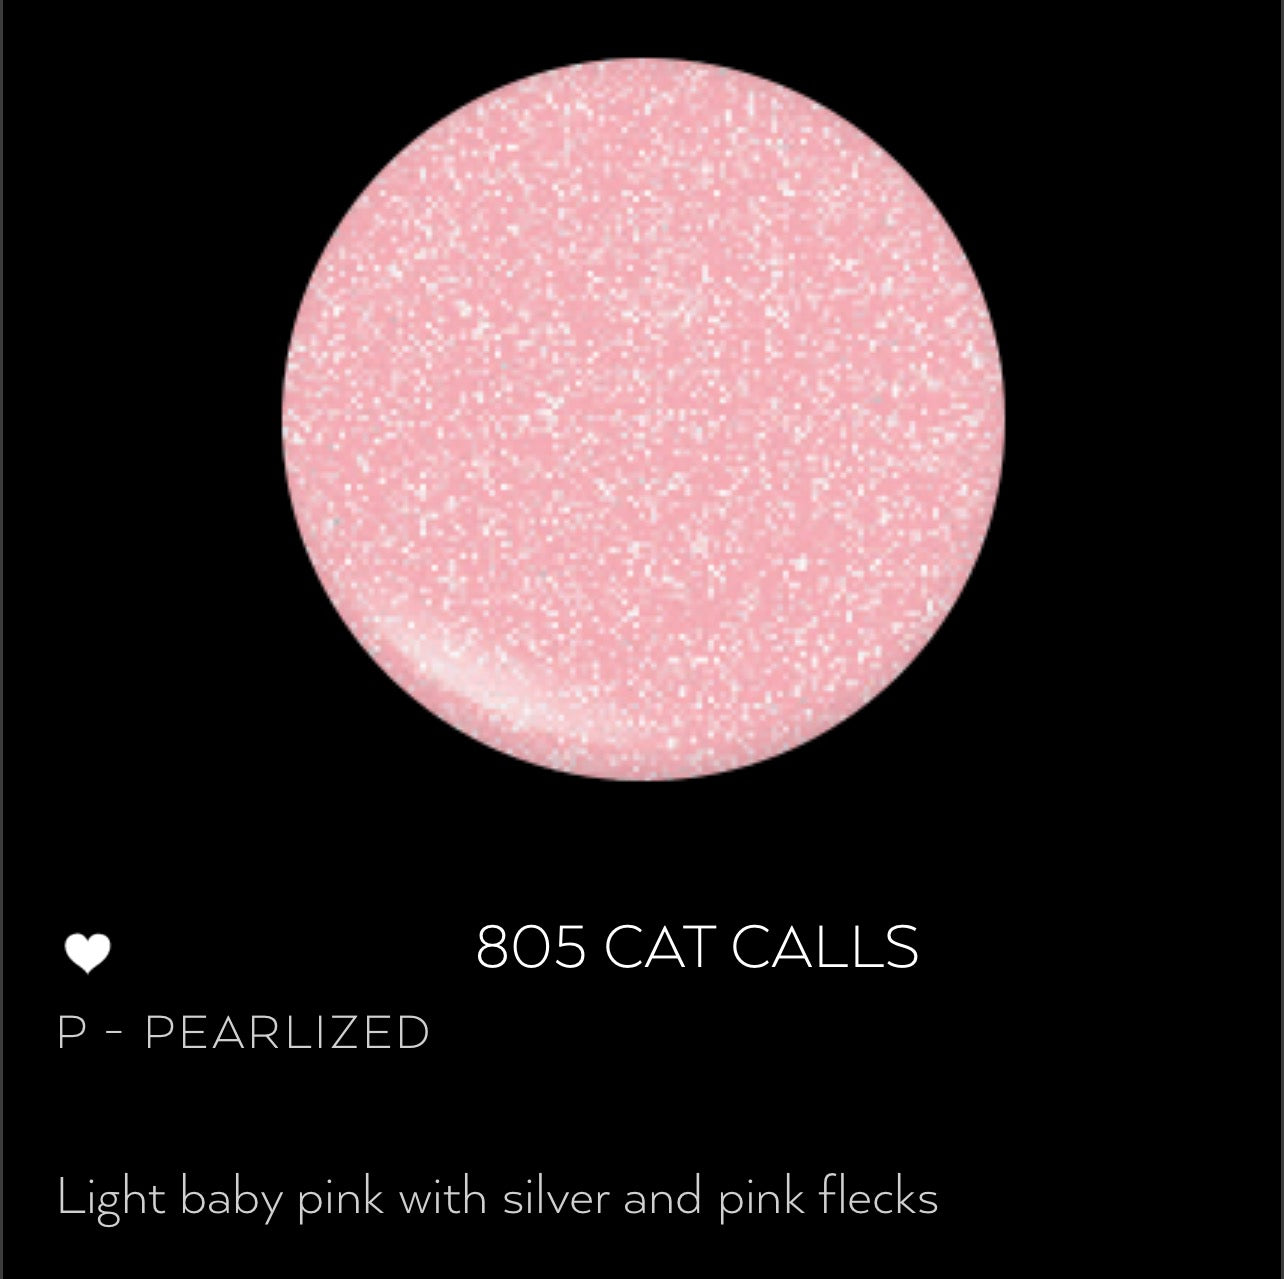 Slip-on-Gloss: CAT CALLS